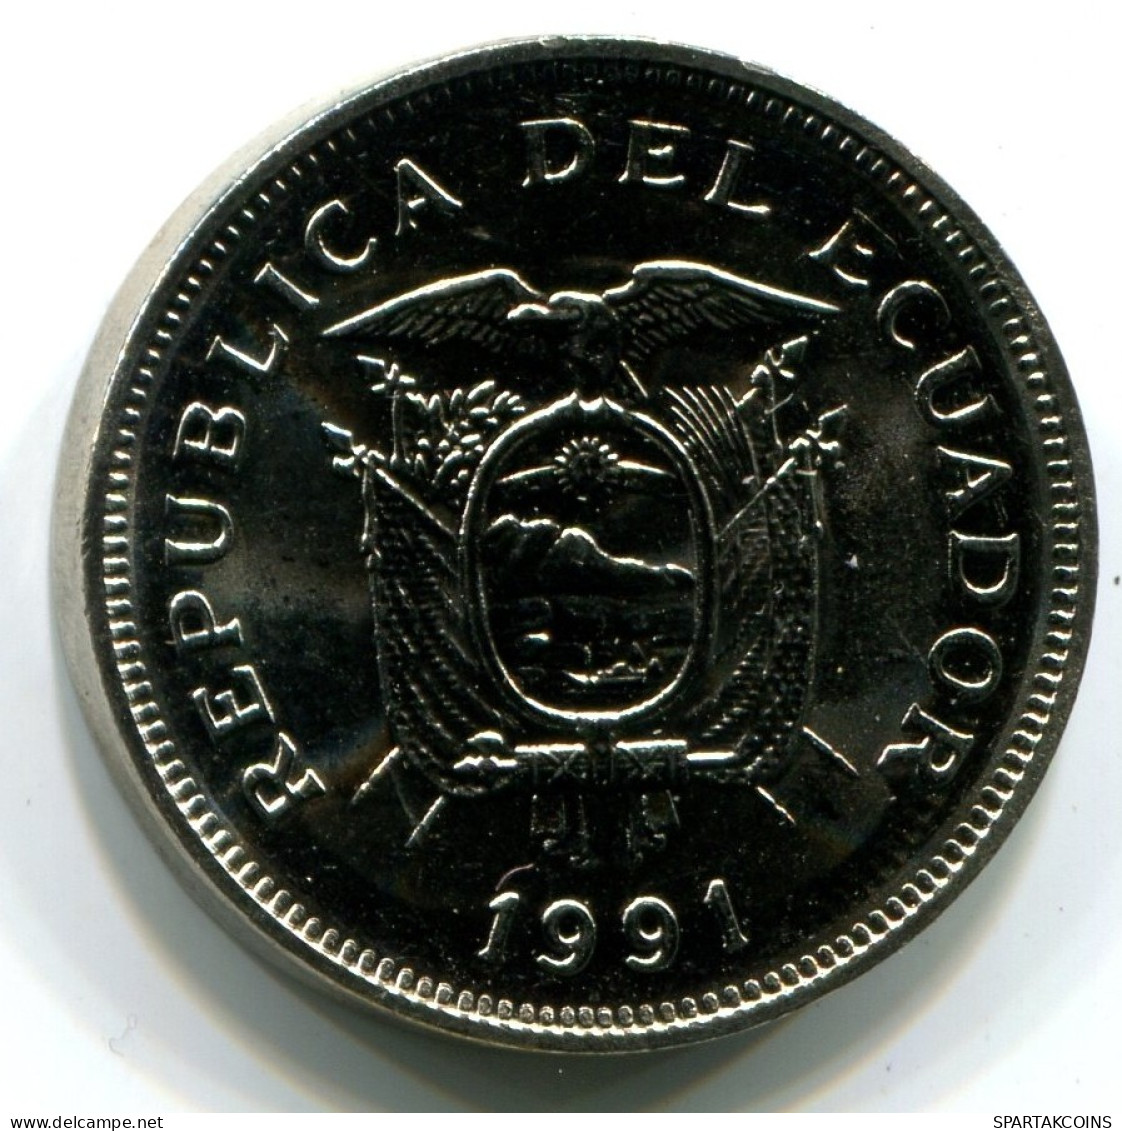 20 SUCRE 1991 ECUADOR UNC Coin #W11118.U.A - Ecuador